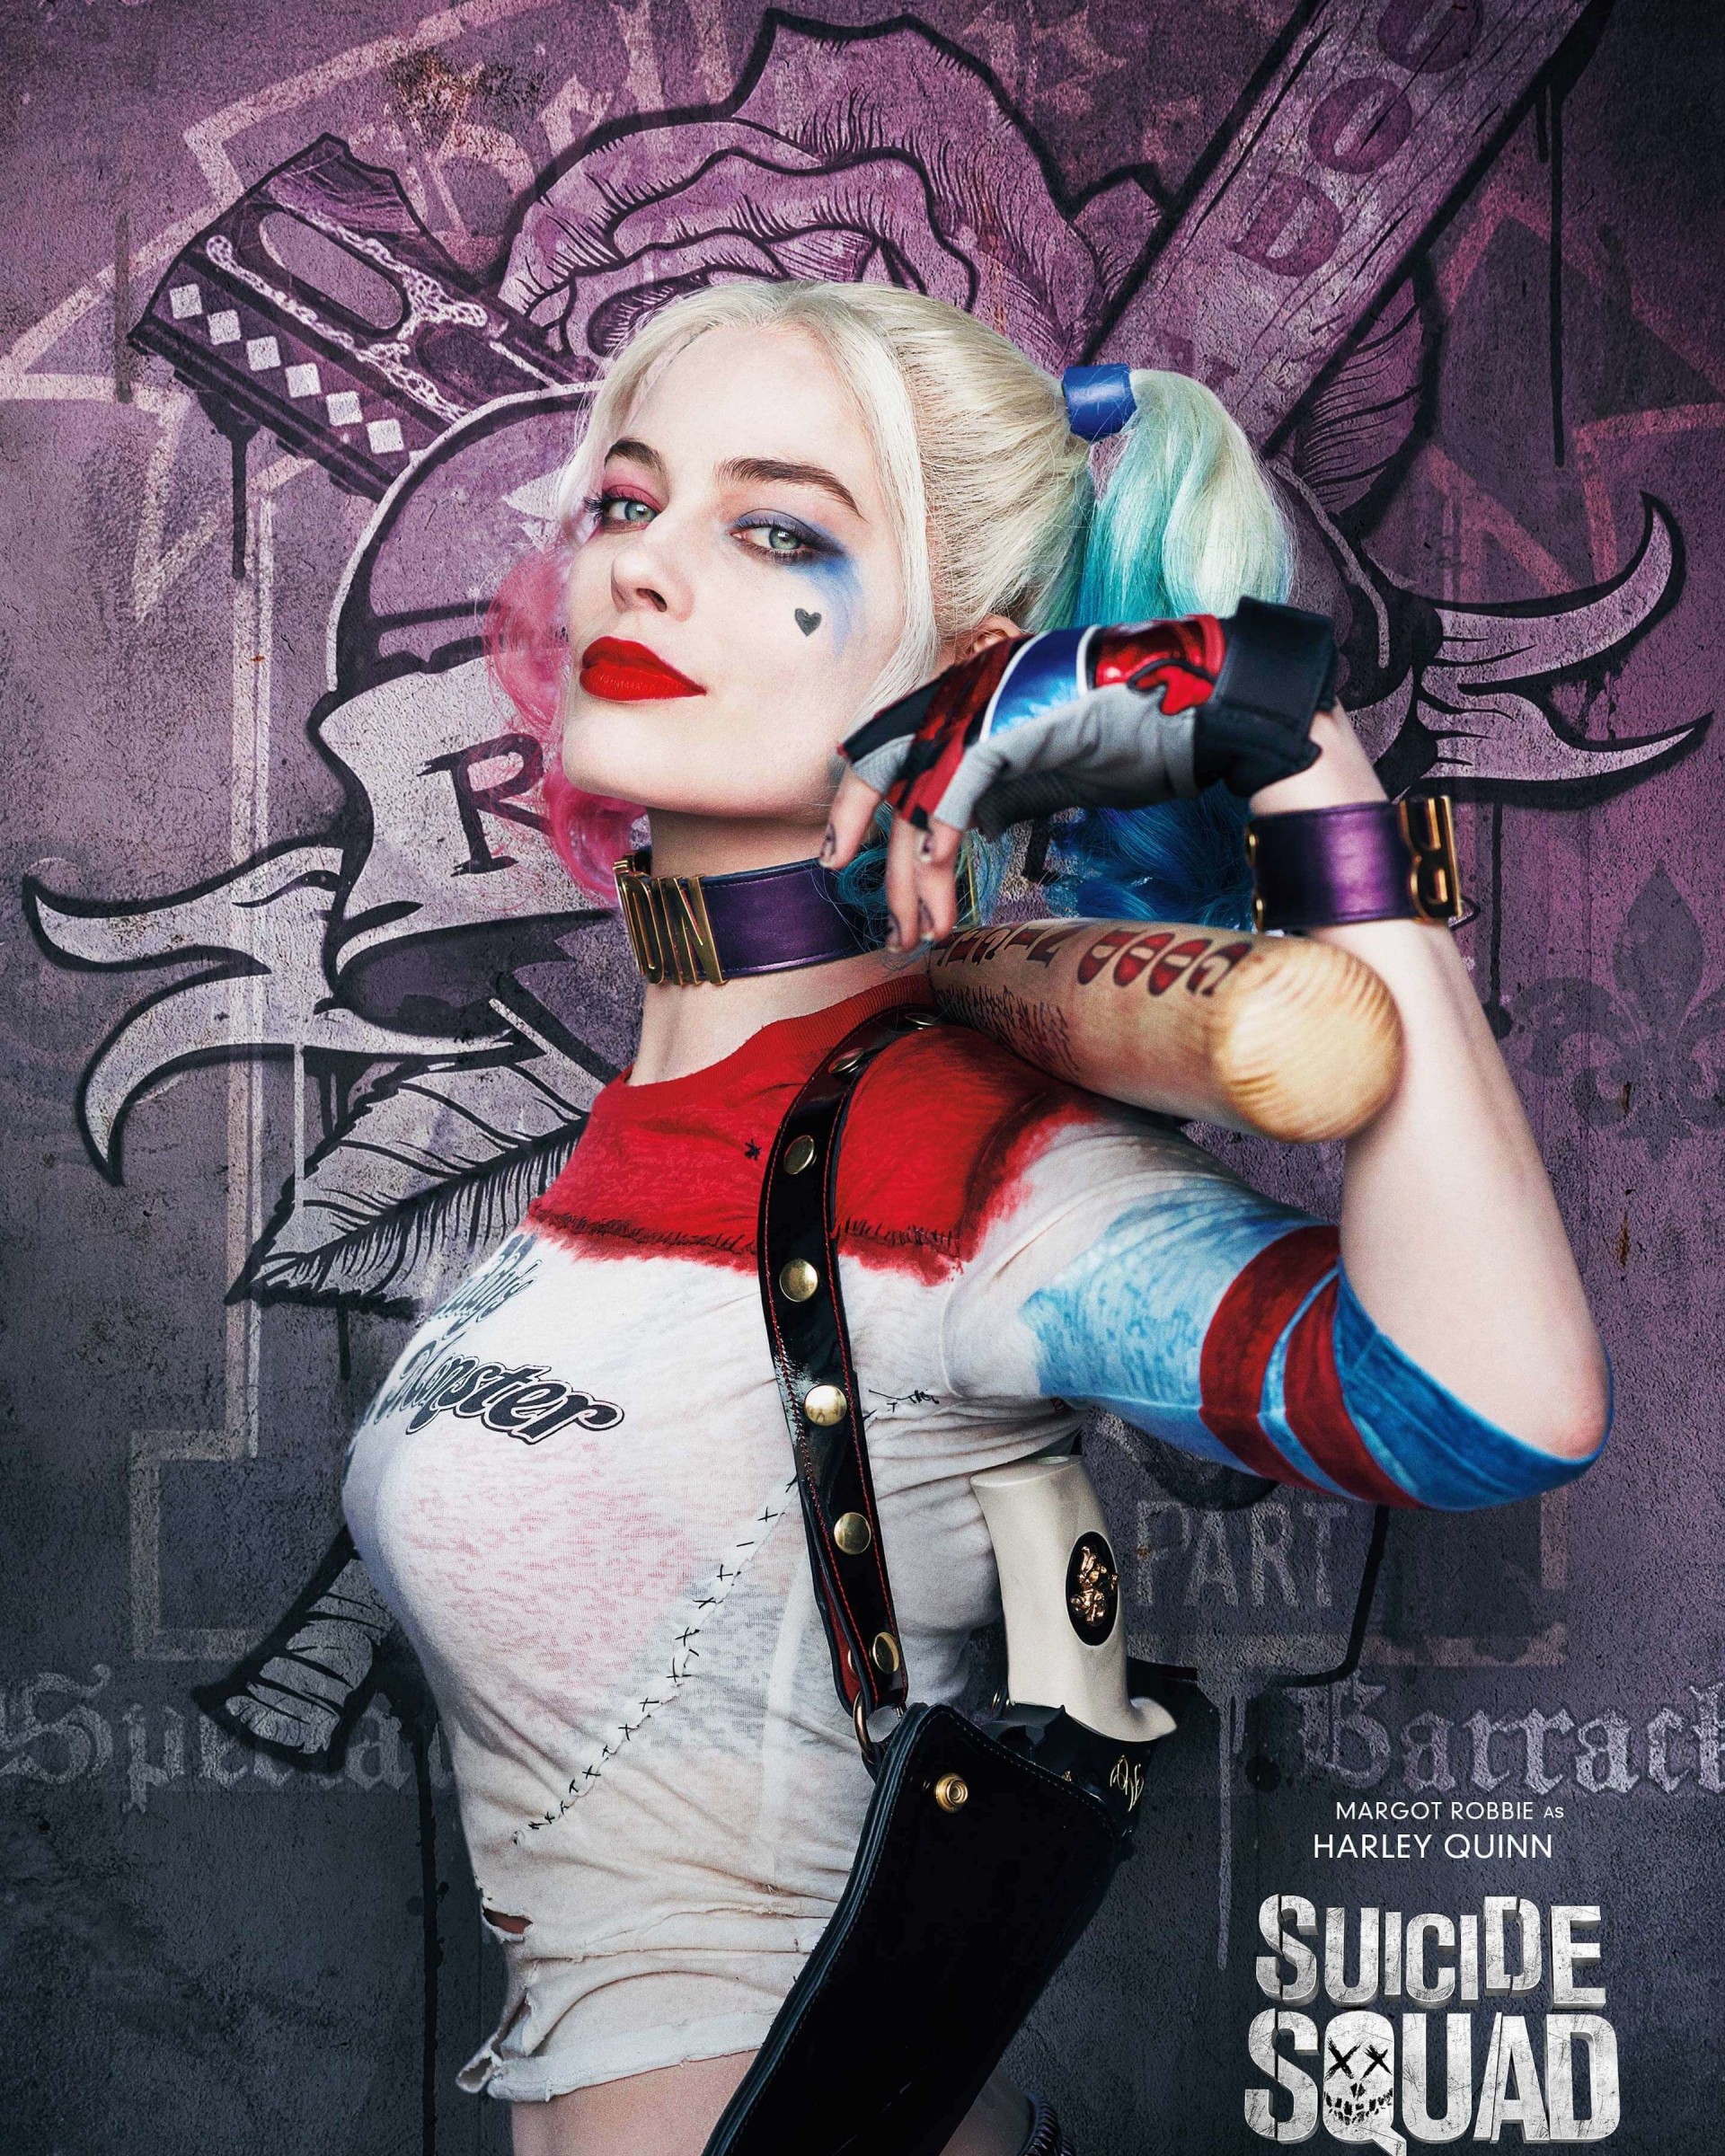 Harley Quinn - Suicide Squad Wallpaper for Google Nexus 7